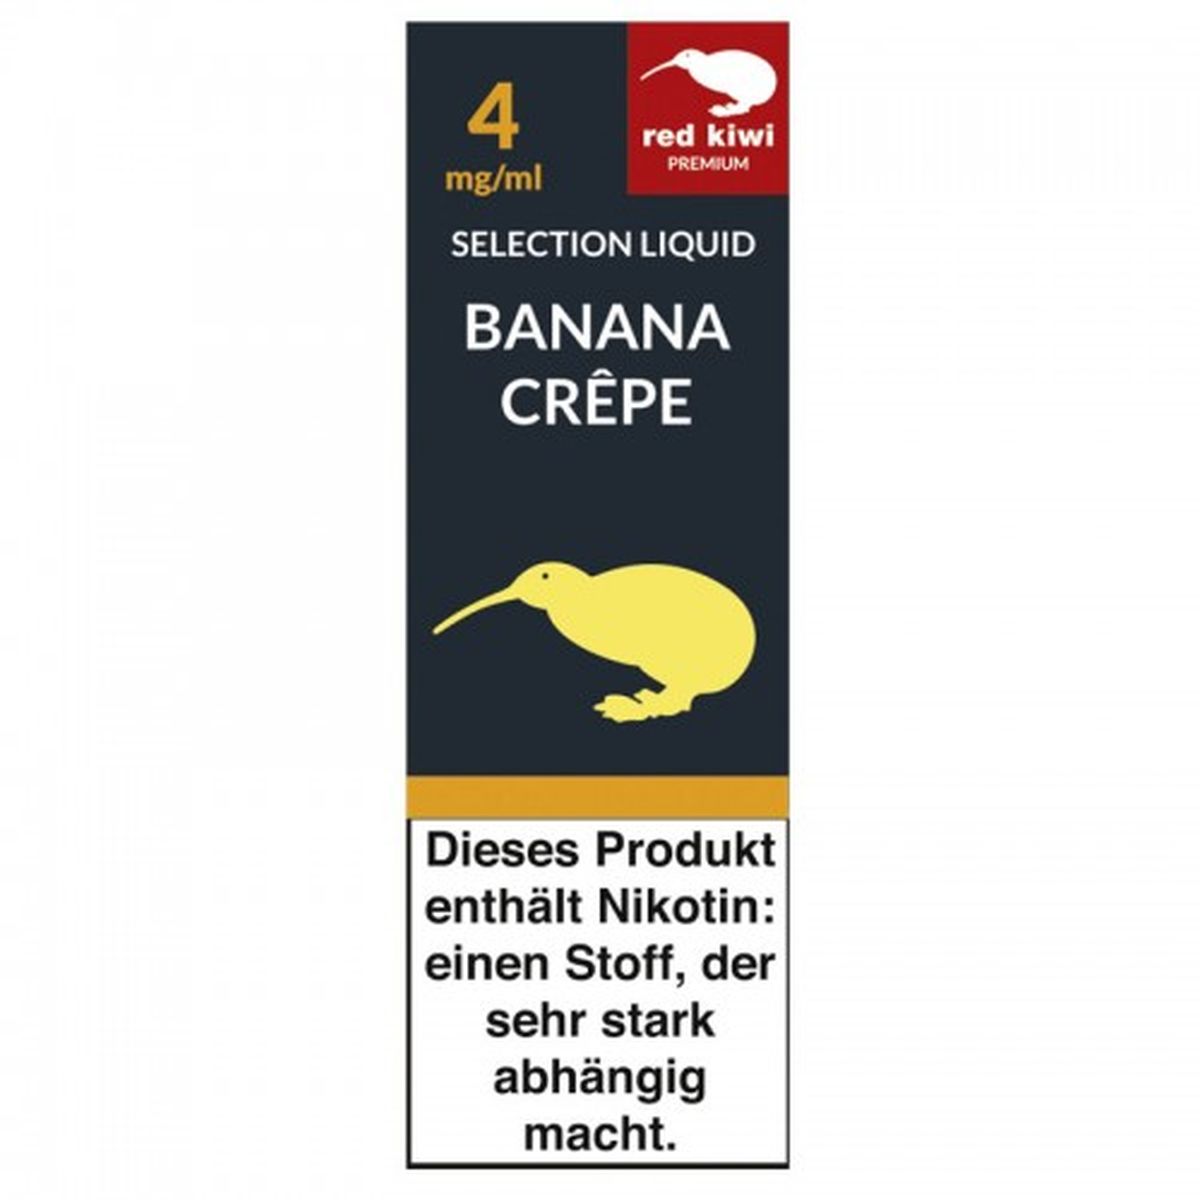 Red Kiwi Red Kiwi eLiquid Selection Banana Crepe 4mg Nikotin/ml bei www.Tabakring.de kaufen